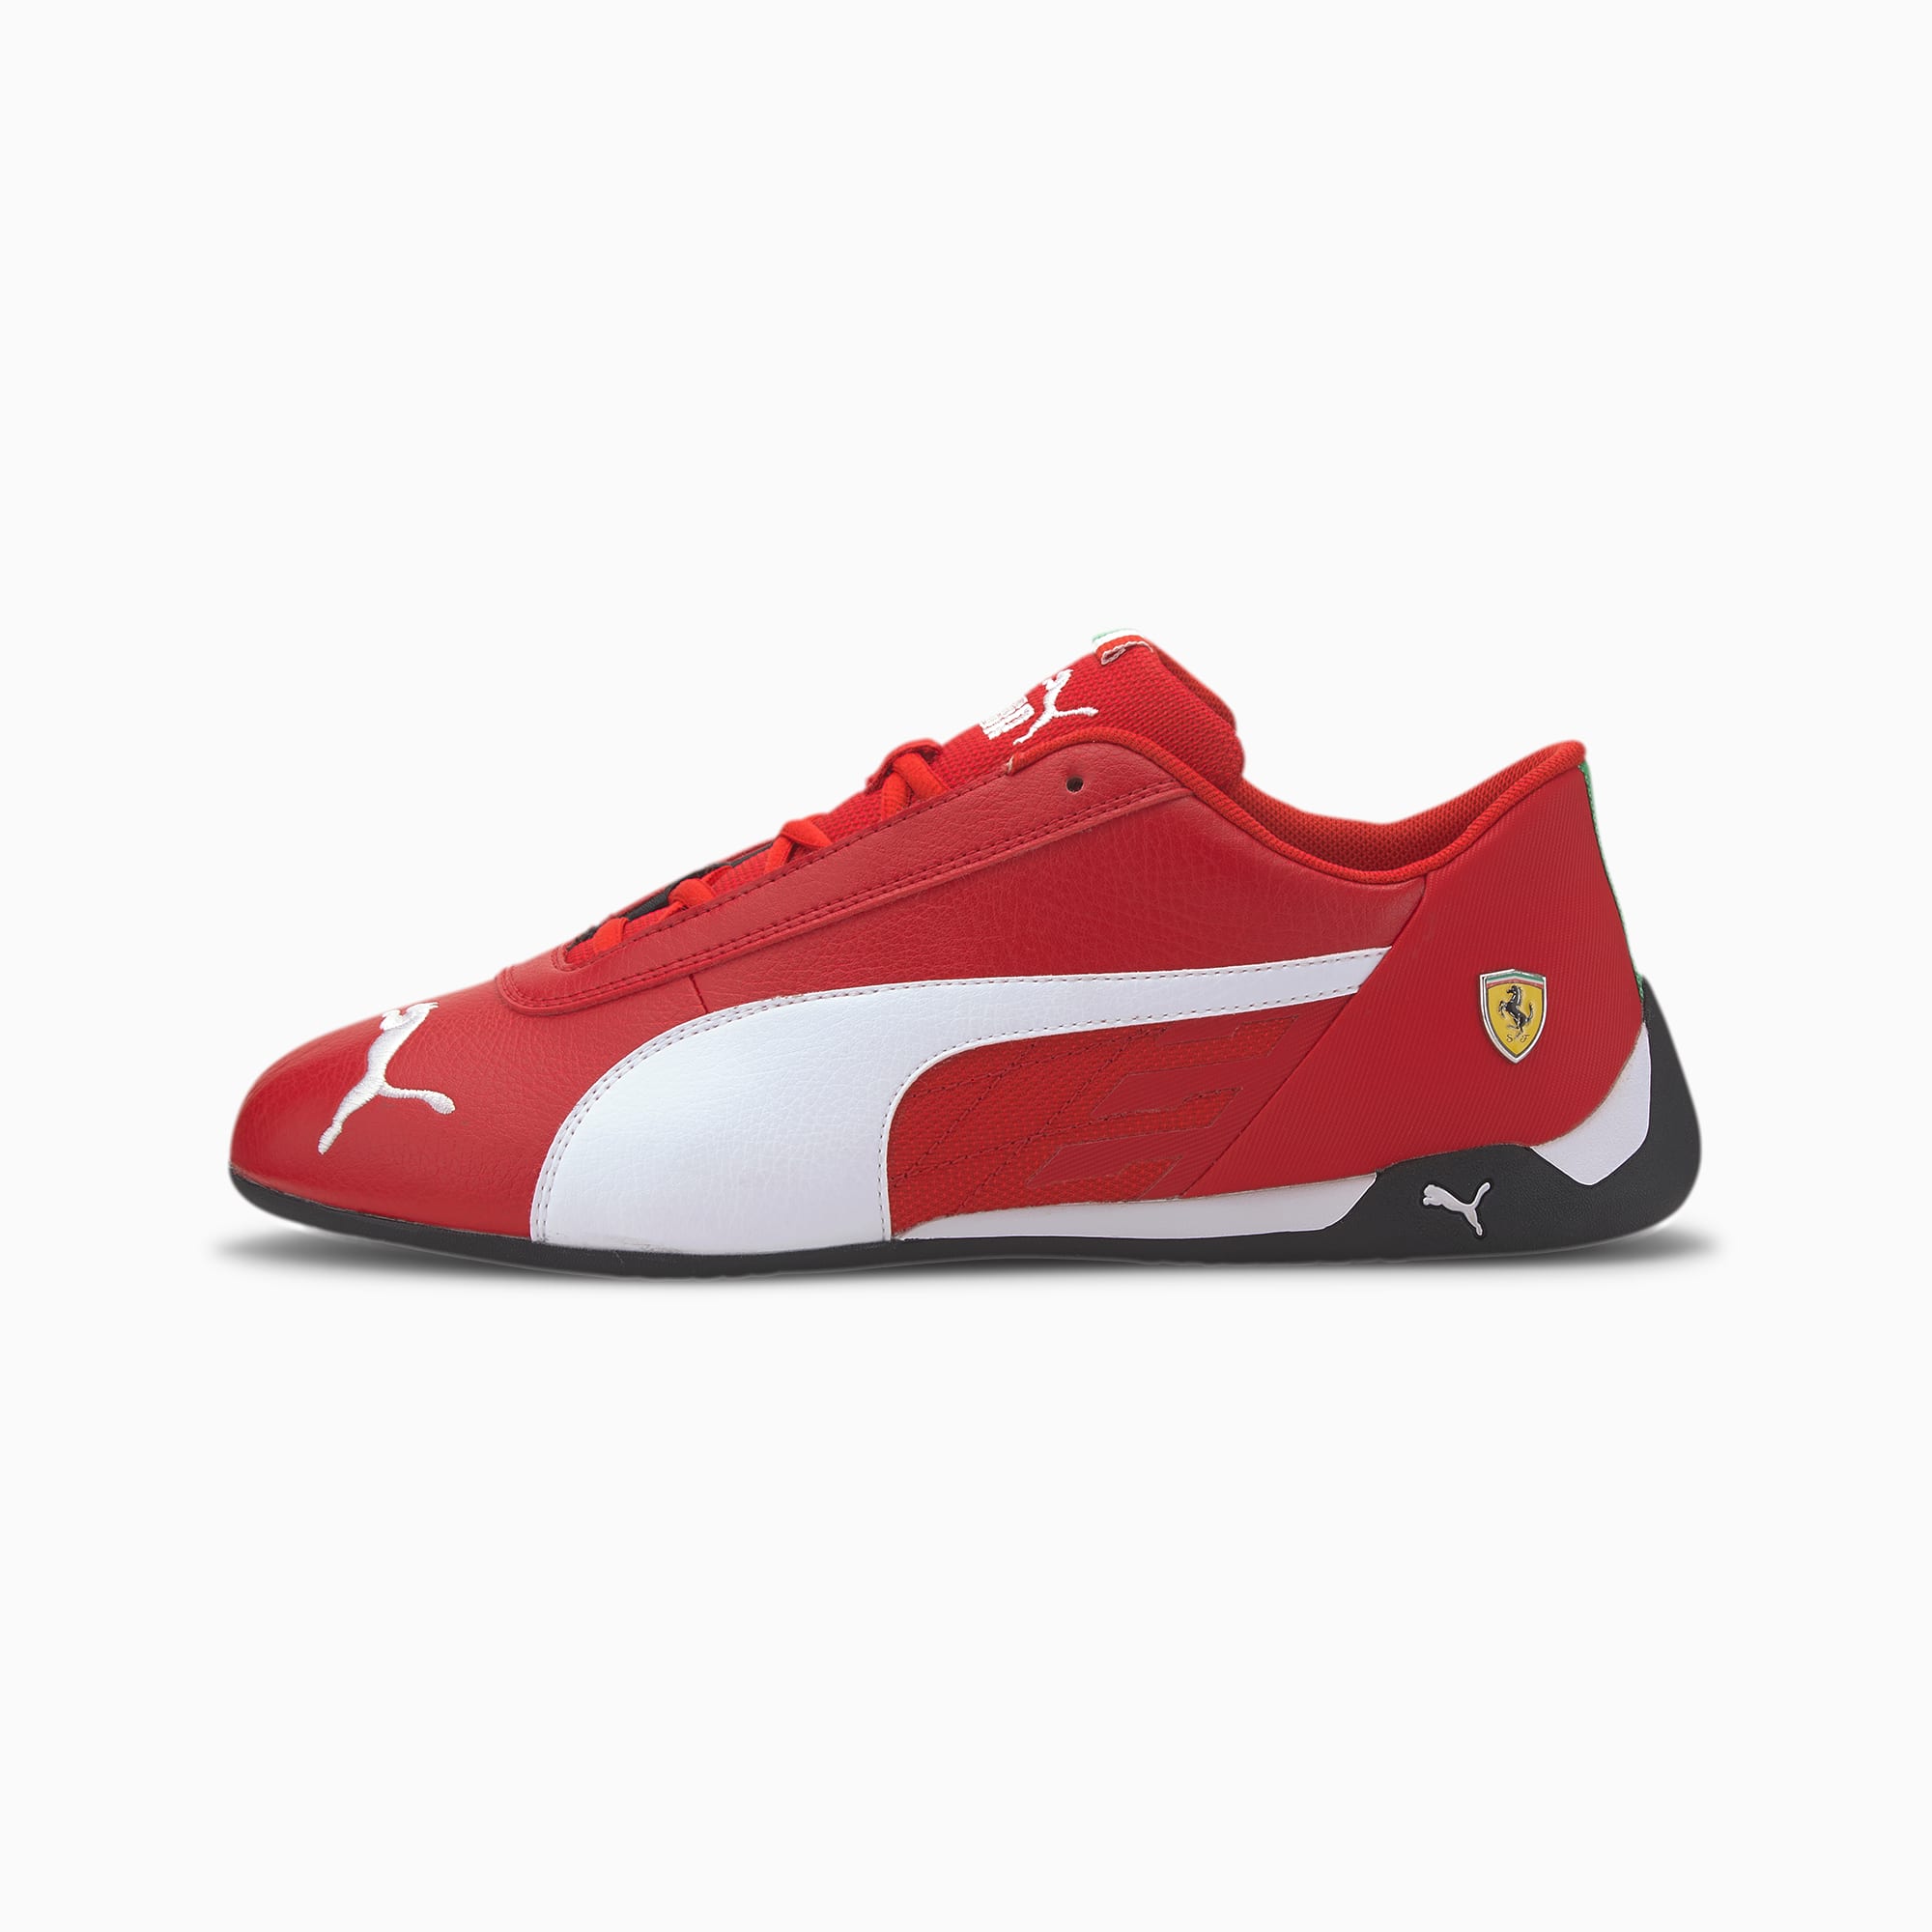 ferrari red shoes